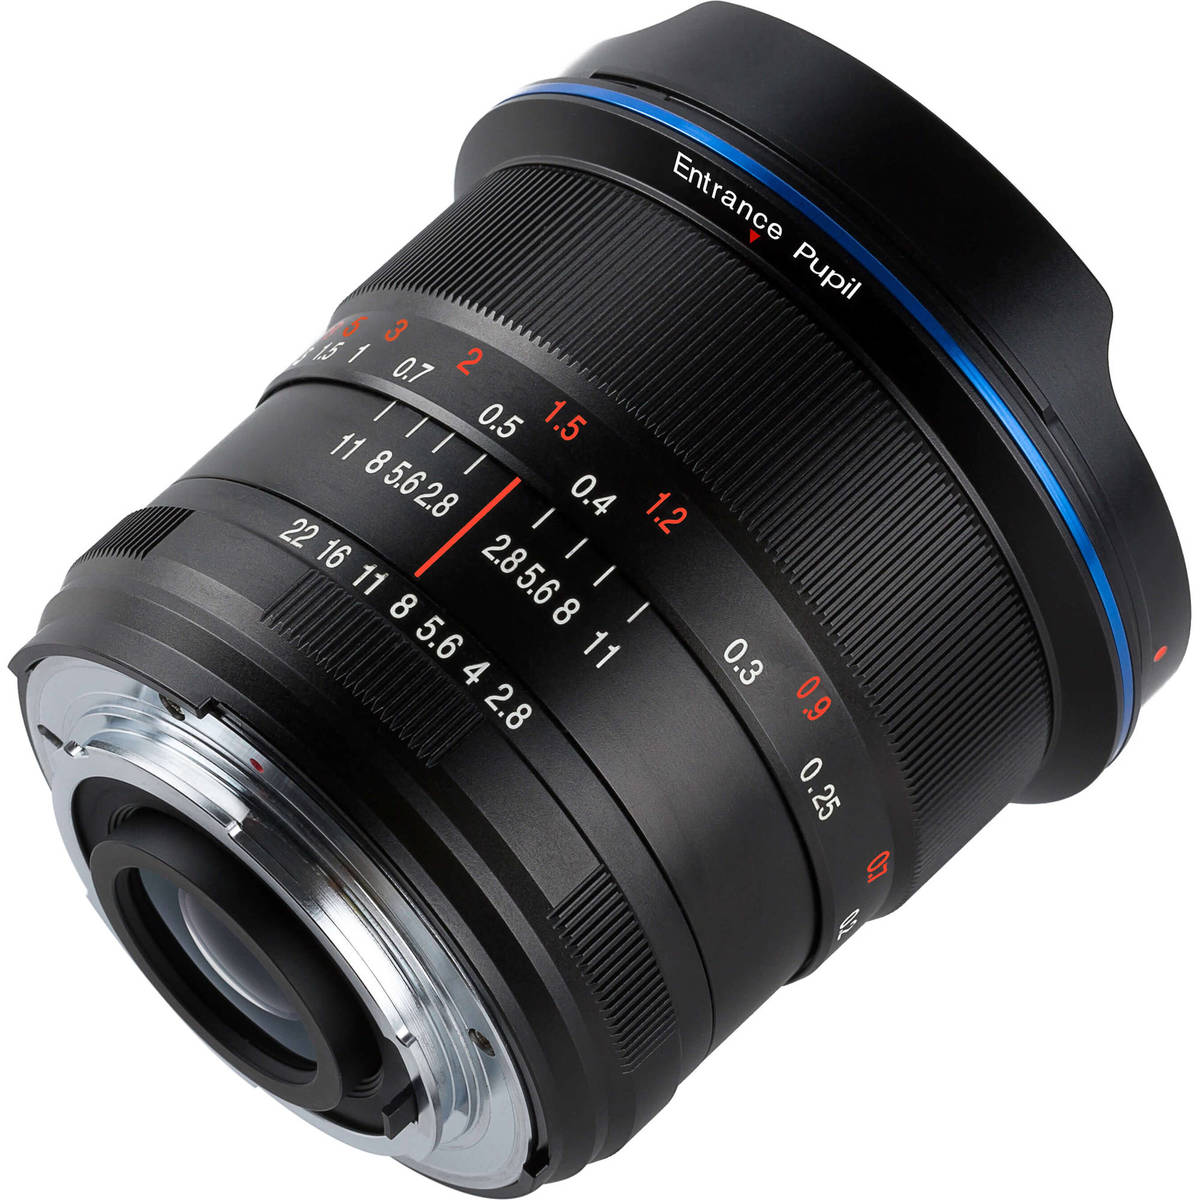 2. LAOWA Lens 12mm f/2.8 Zero-D (Pentax K)